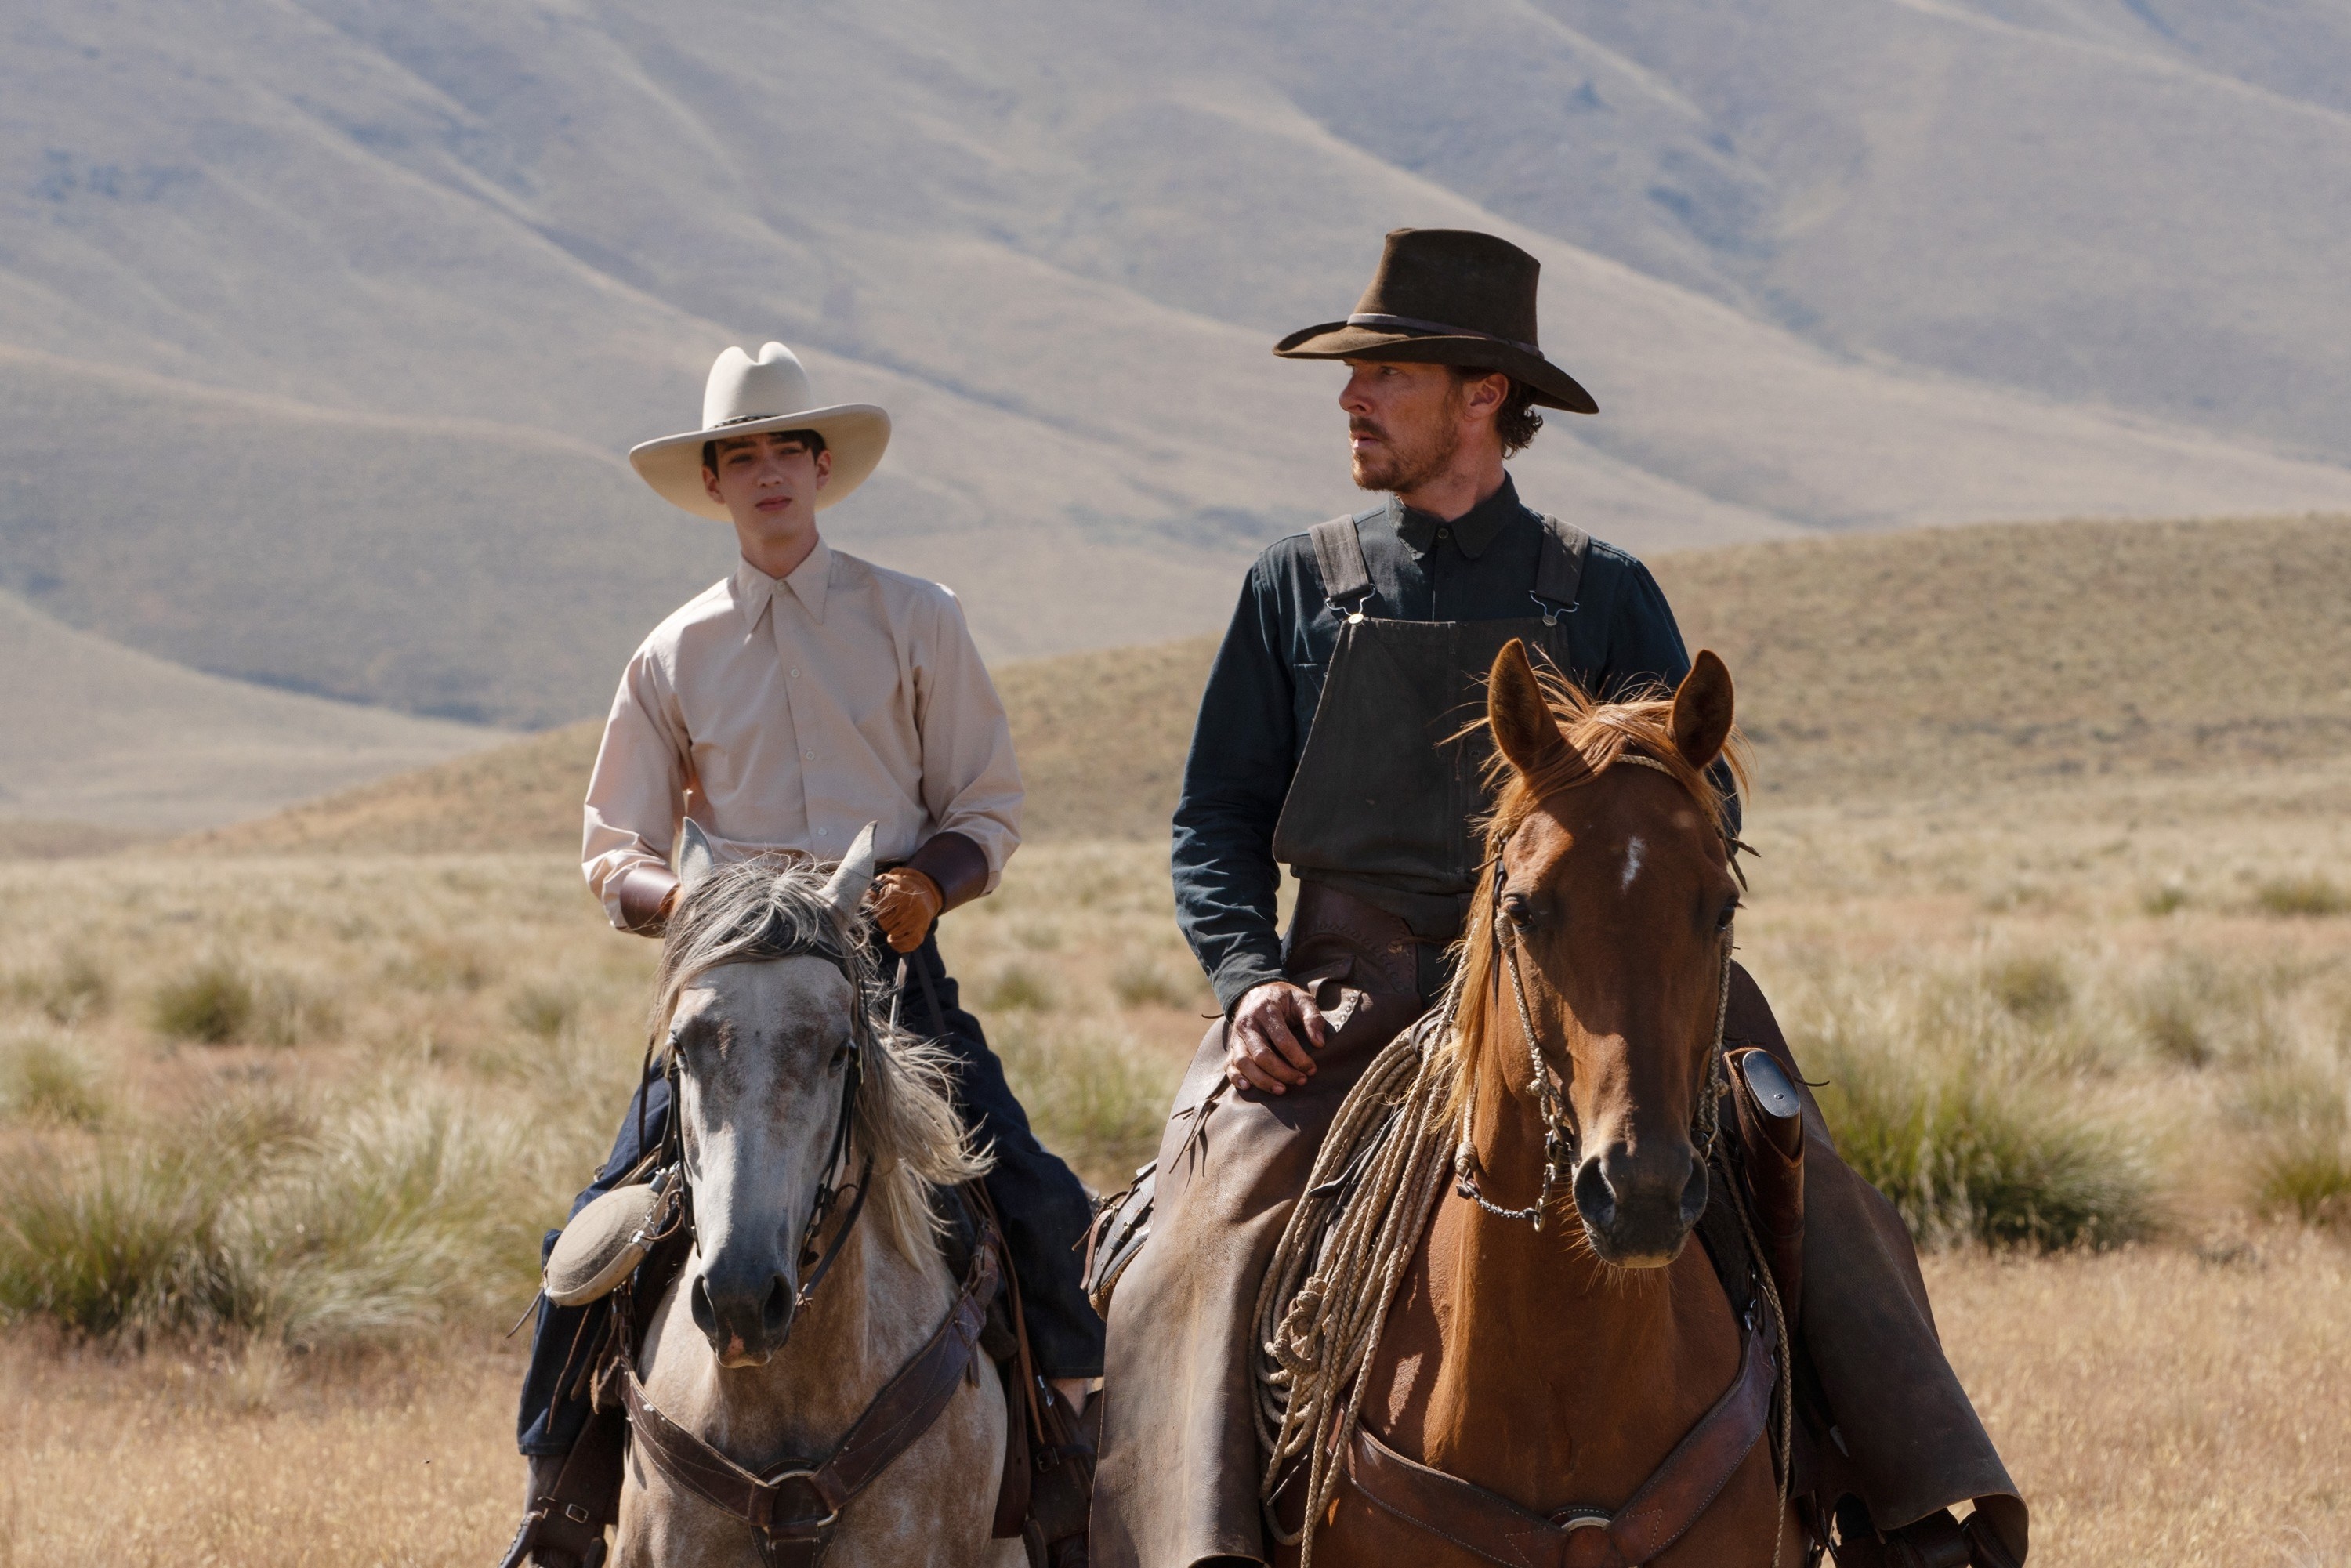 Benedict and Kodi Smit-McPhee ride horses together